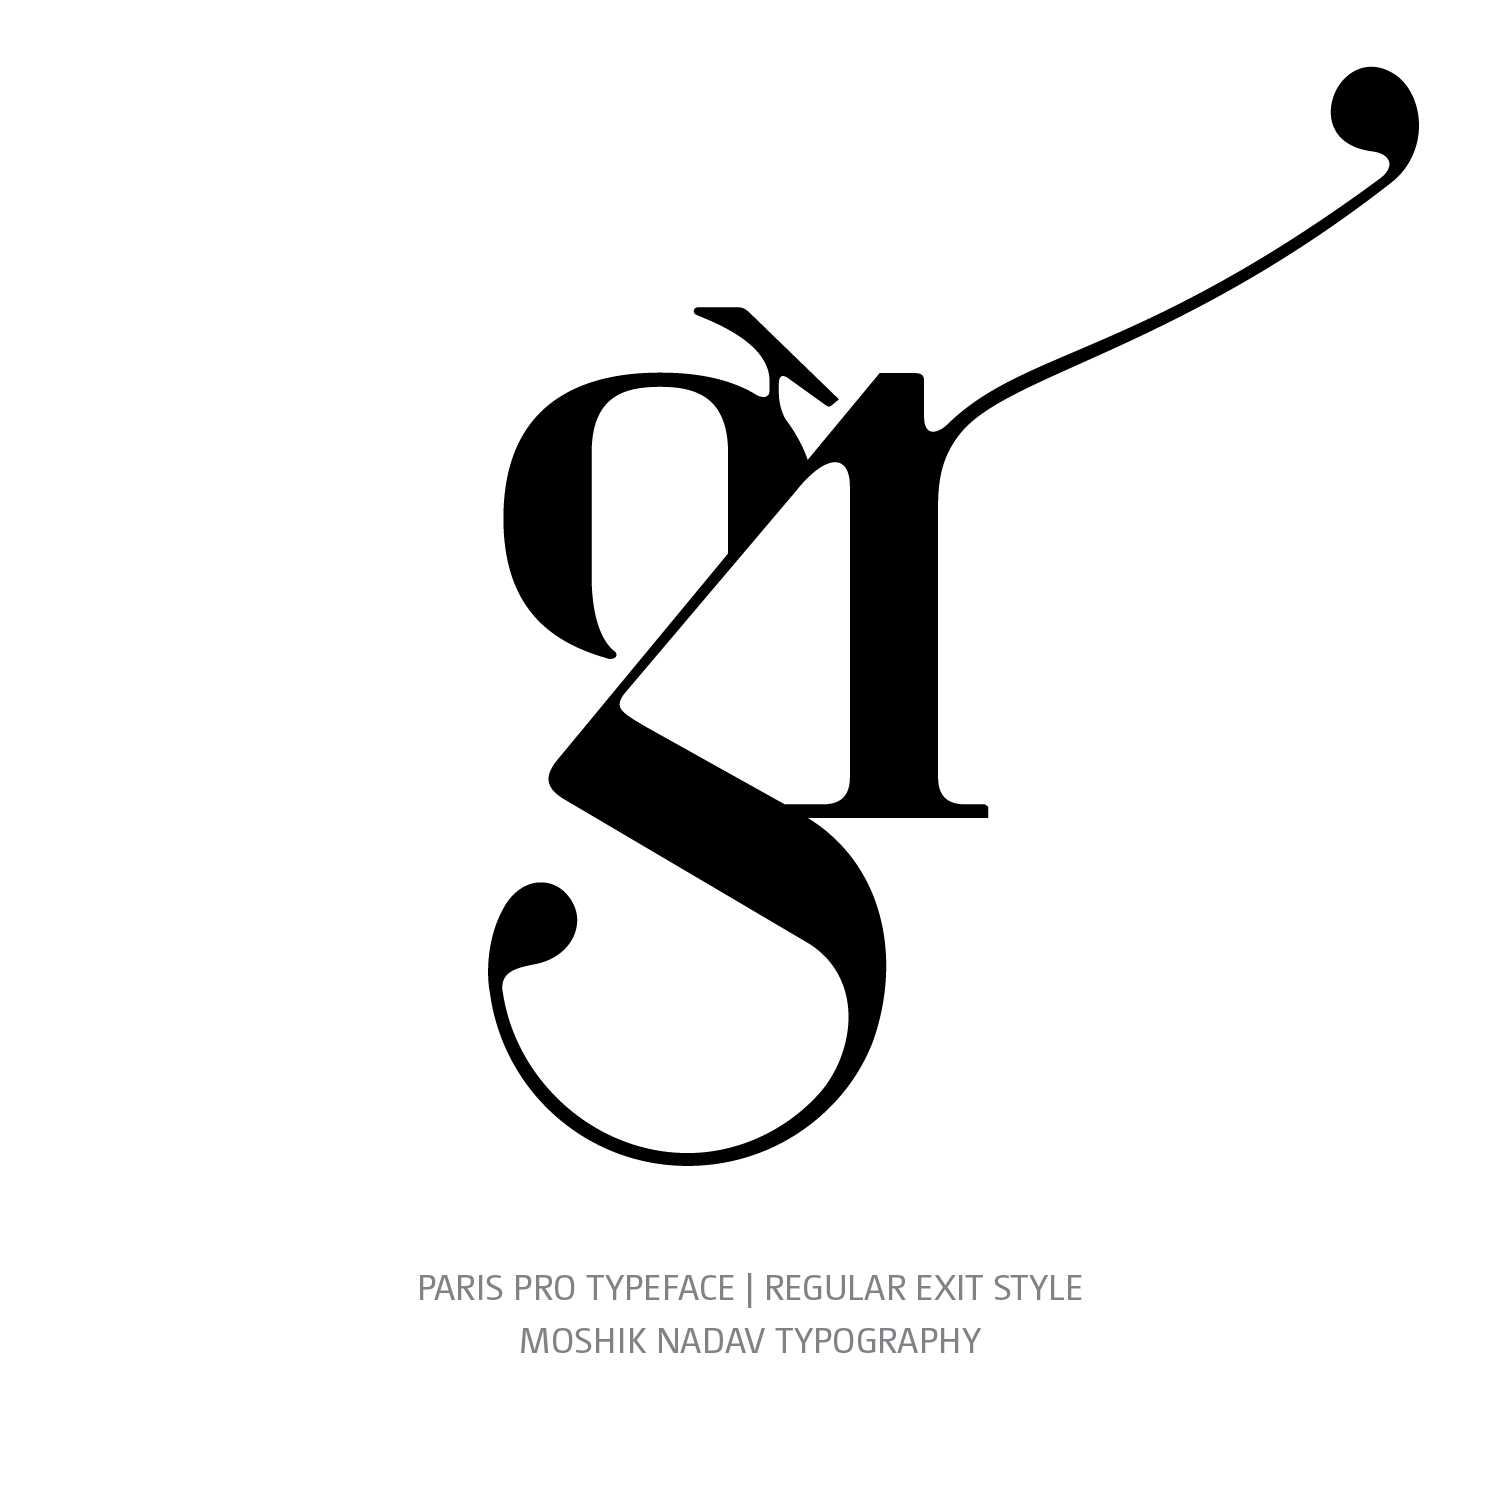 Paris Pro Typeface Regular Exit gr alternative ligature